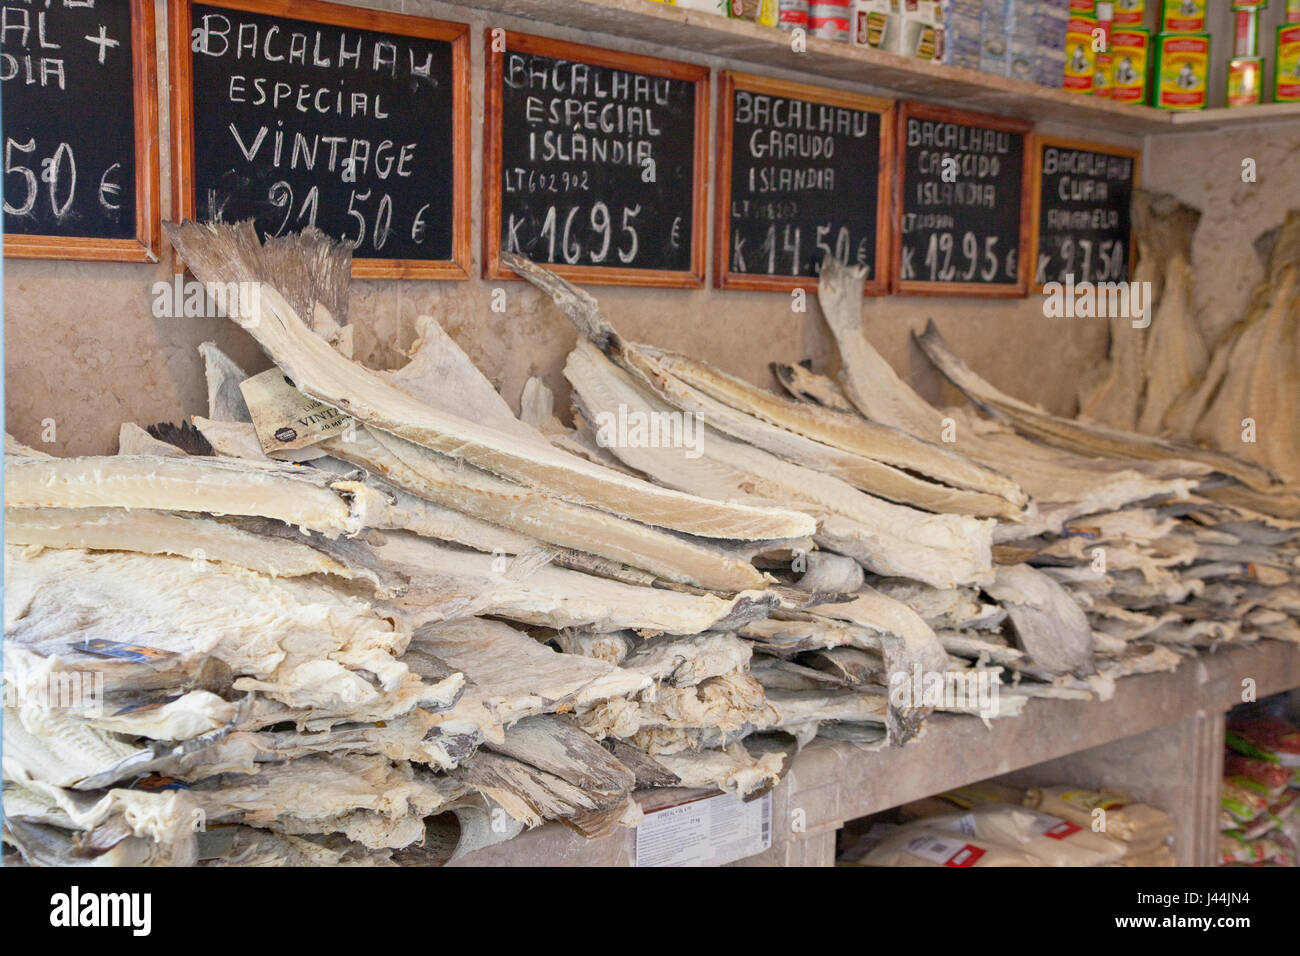 Portugal, Estredmadura, Lisbon, Baixa, Display of Bacalhau salt dried cod. Stock Photo